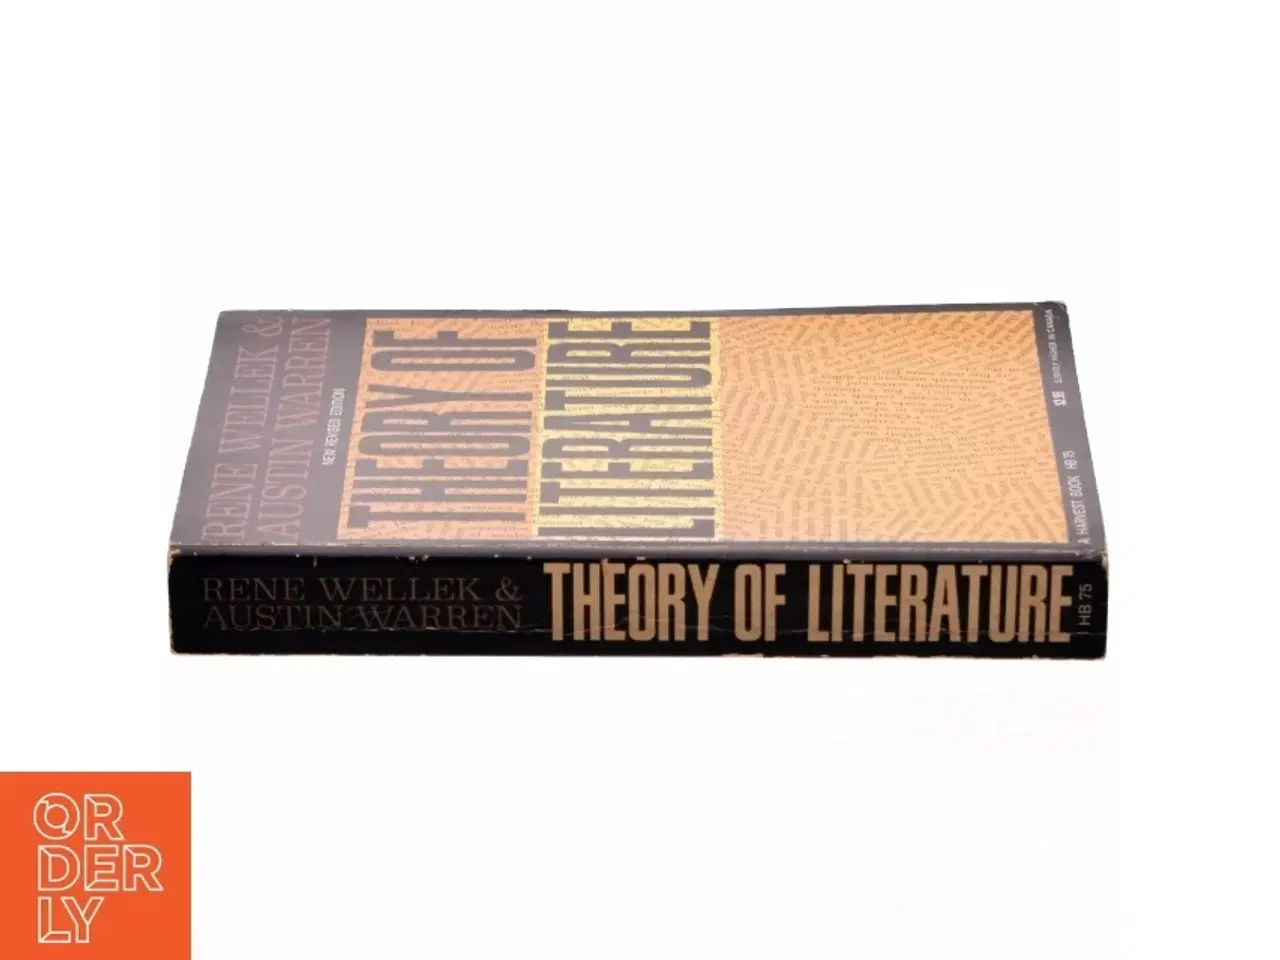 Billede 2 - Theory of literature by Rene Wellek